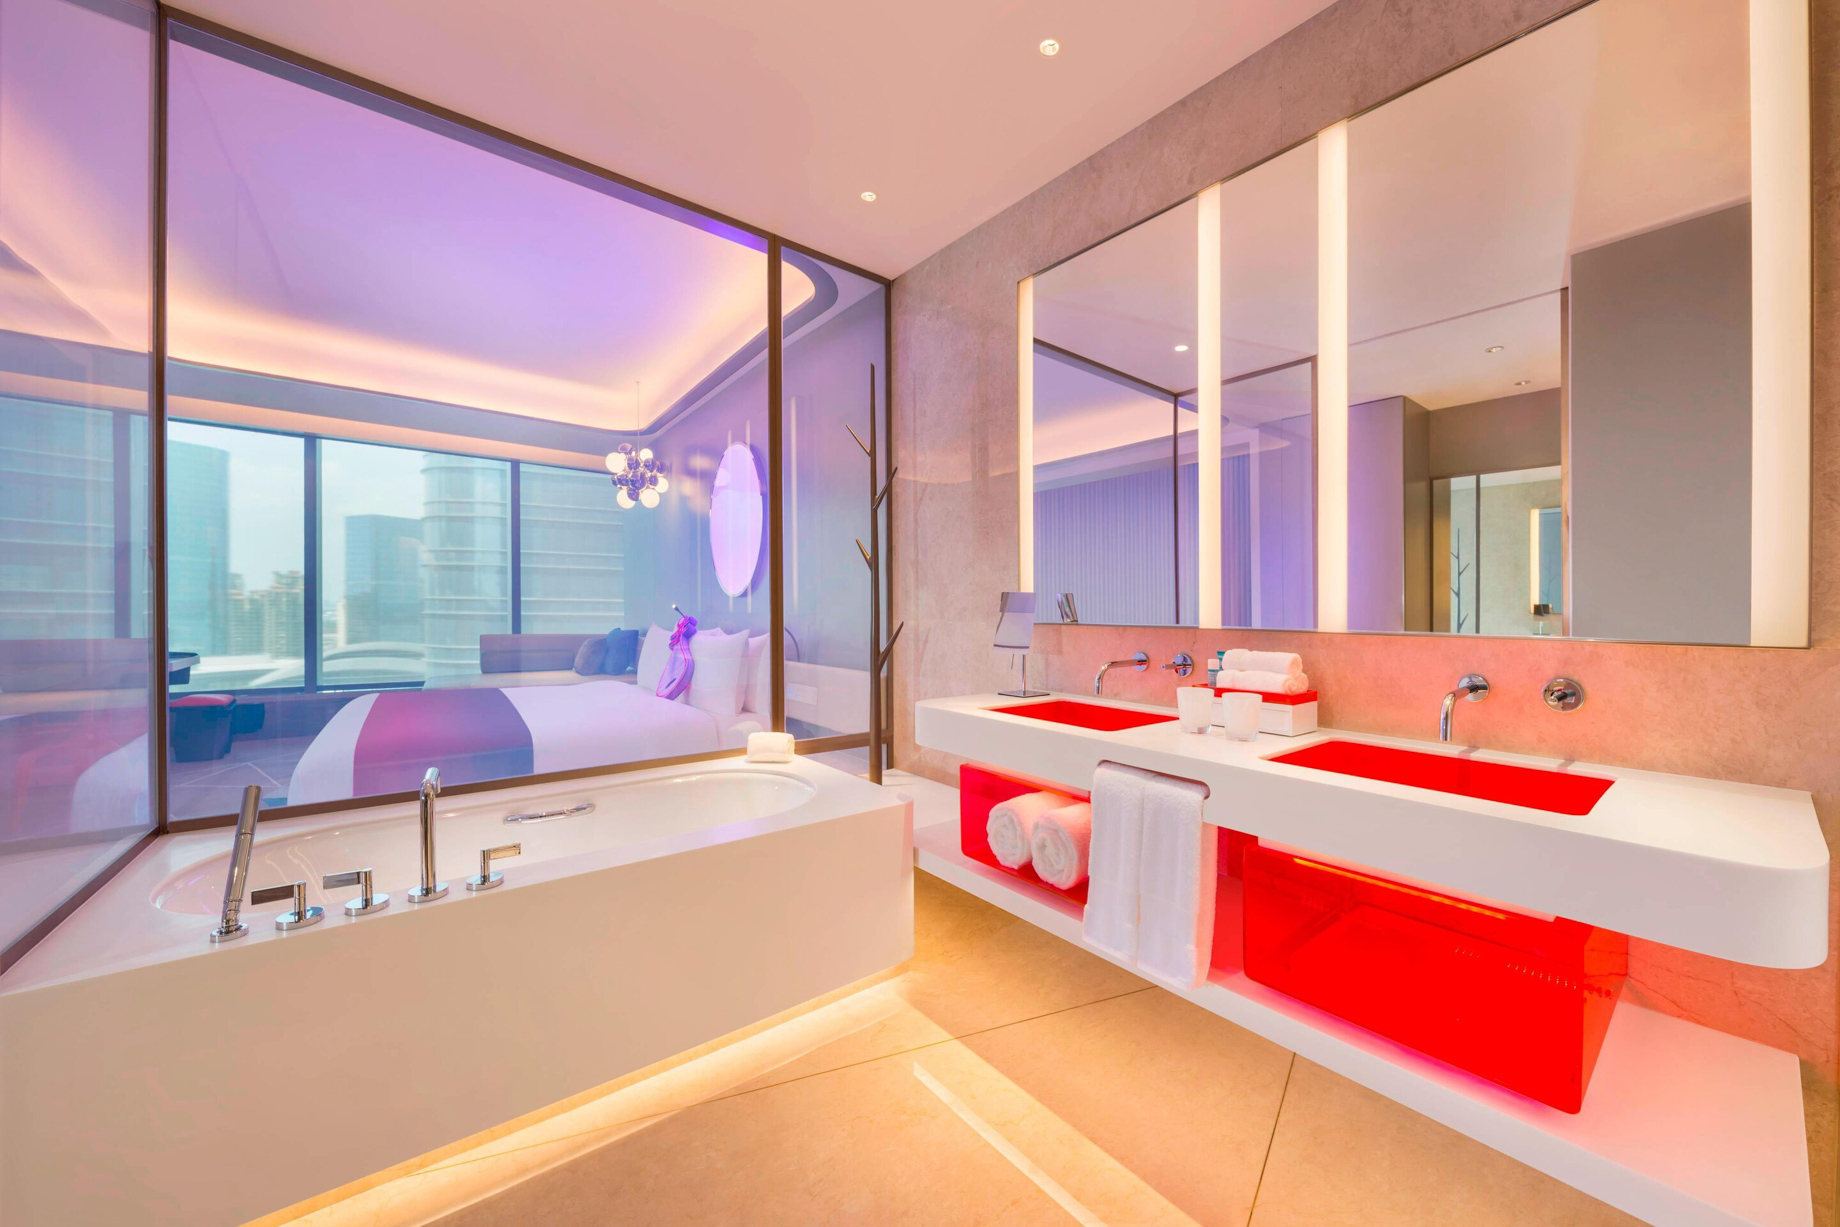 W Suzhou Hotel – Suzhou, China – Spectacular Guest Bathroom